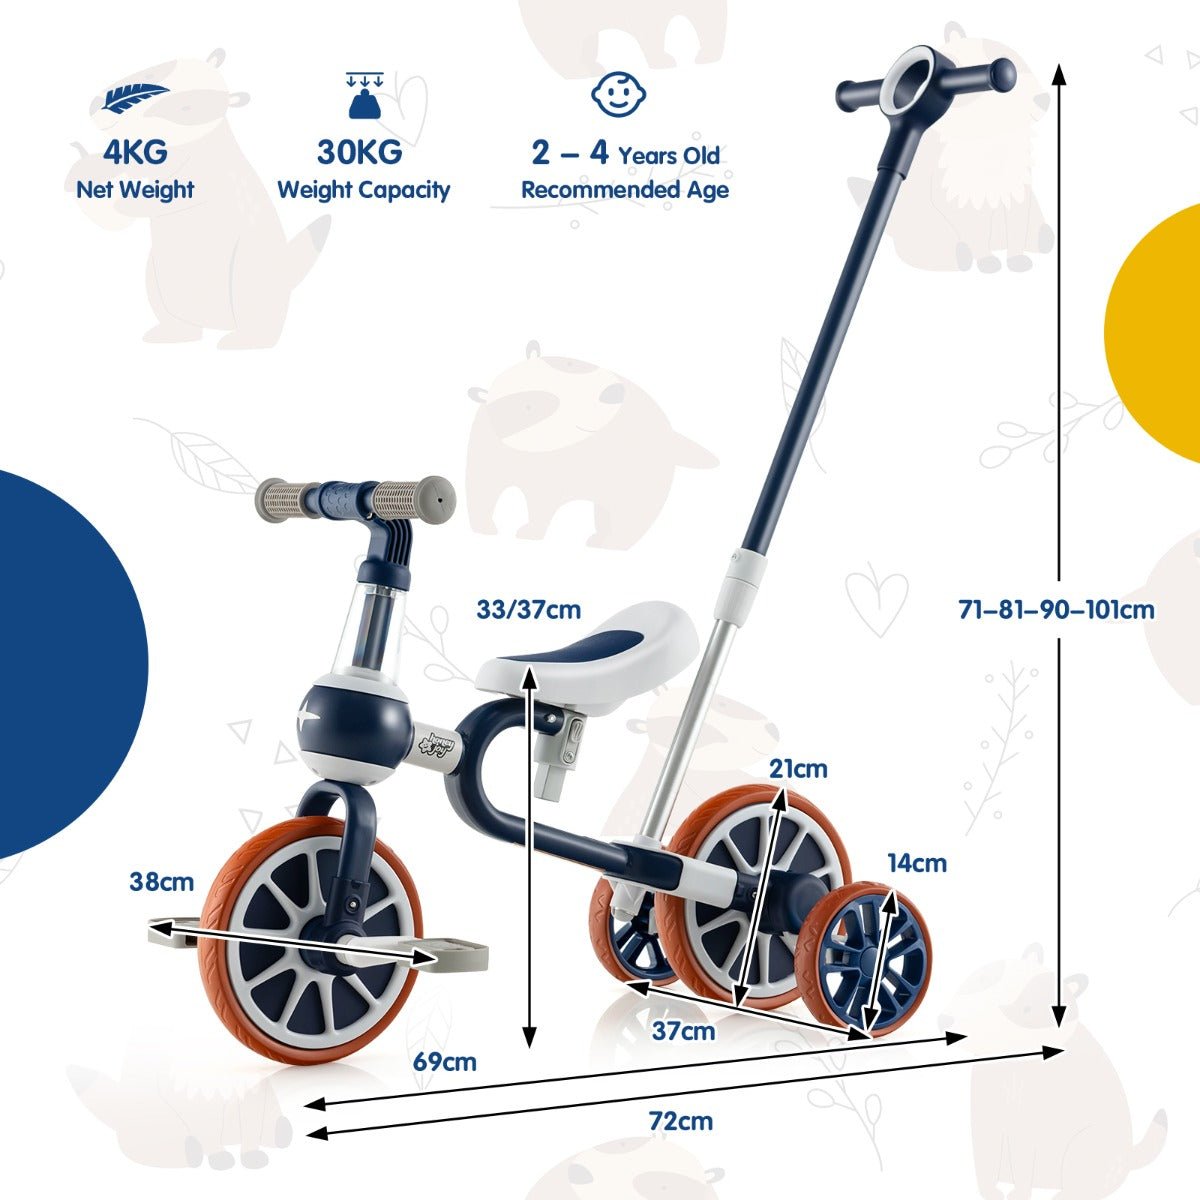 Navy Blue 4-in-1 Trike Bike for Kids - Adjustable Parent Push Handle